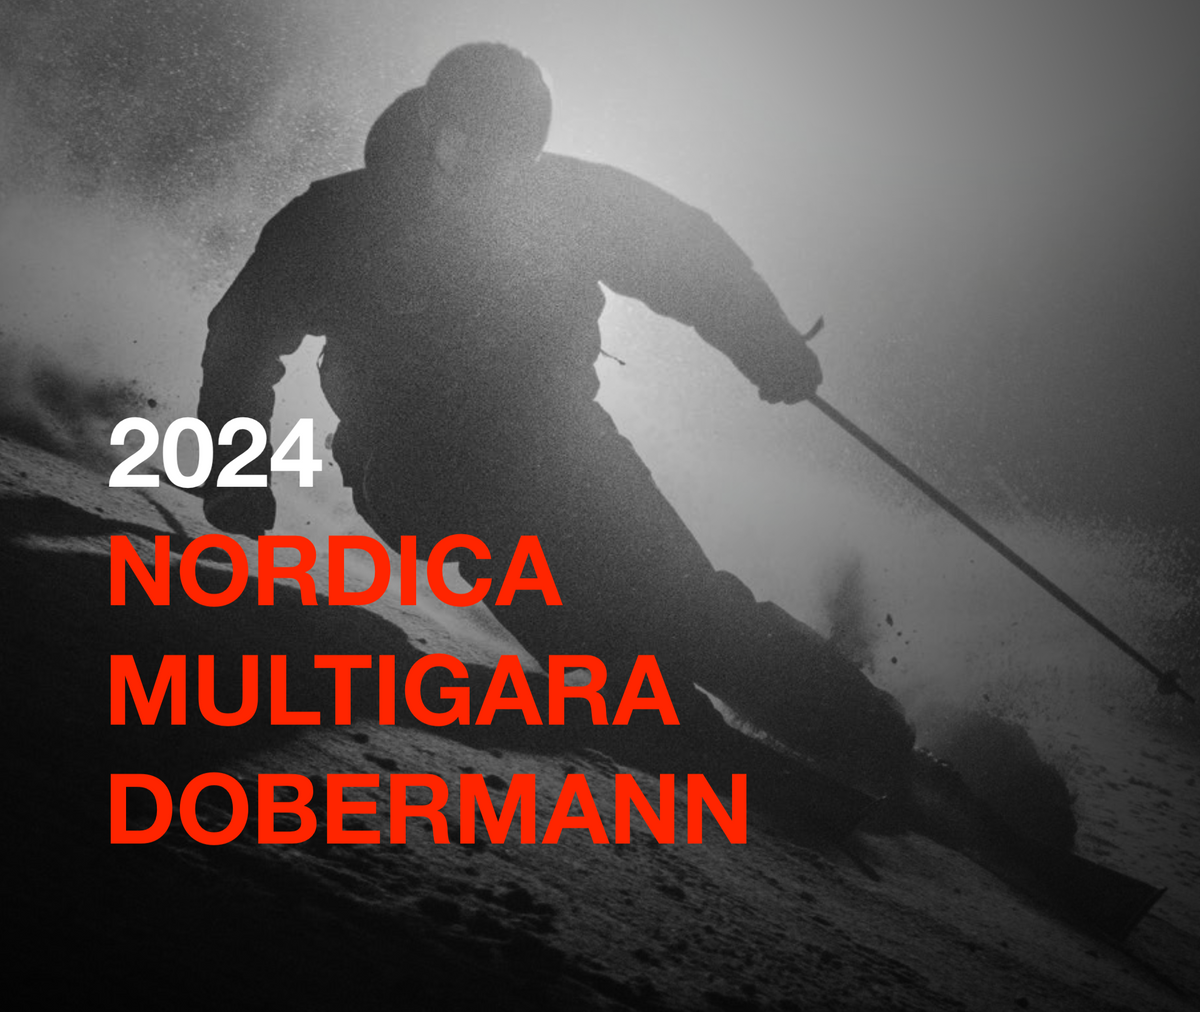 Introducing the 2024 NORDICA DOBERMANN MULTIGARA.